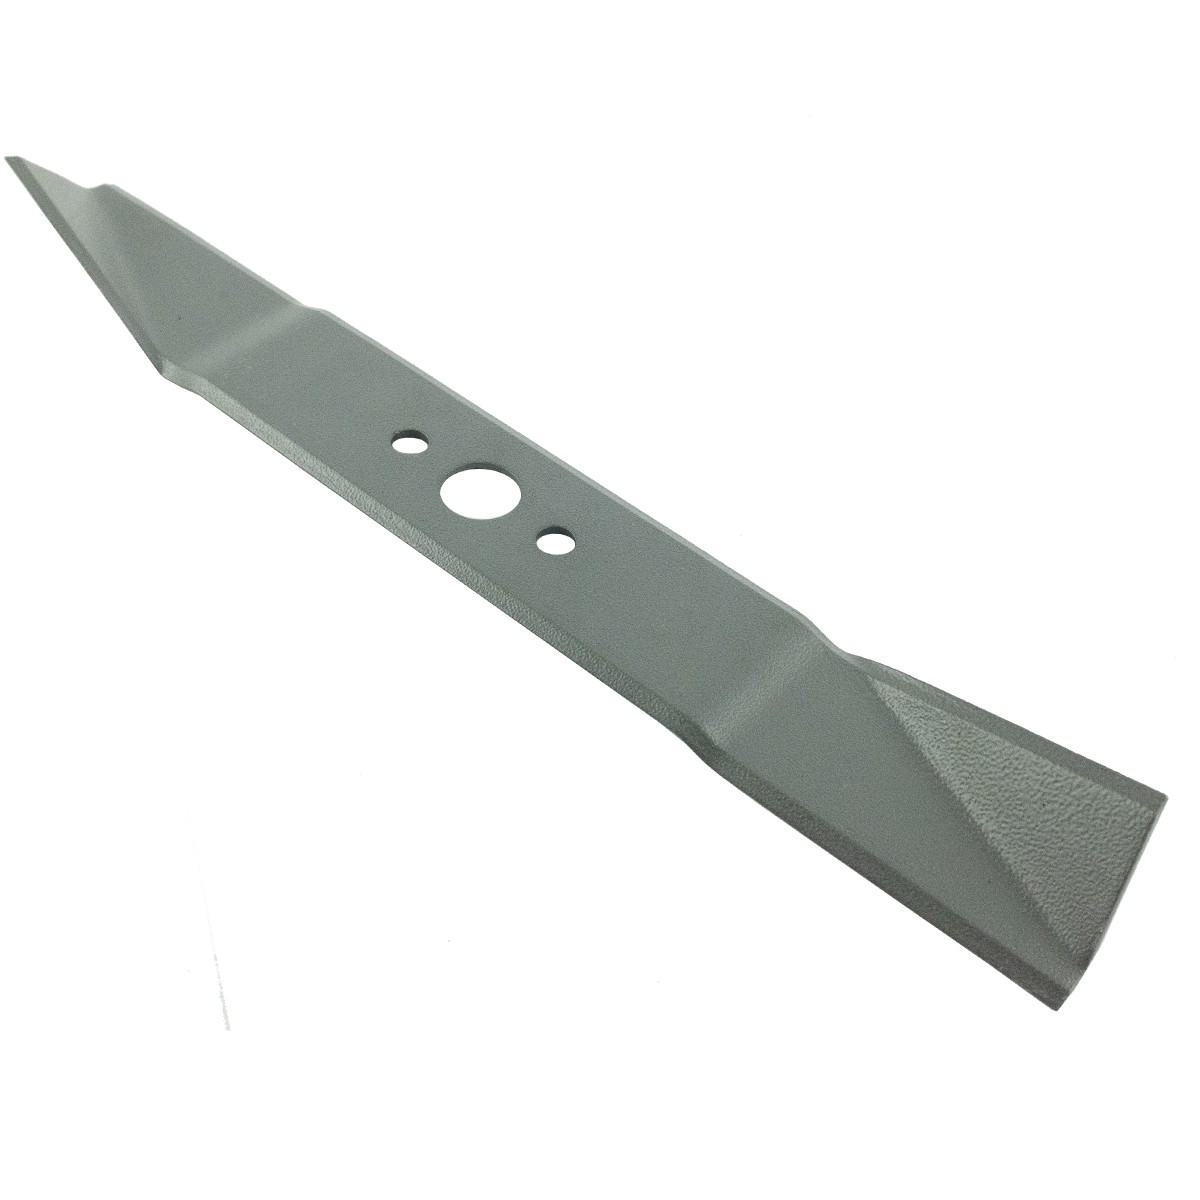 Knife, 325 mm, mower Stiga Turbo 35 el, 81004115/1